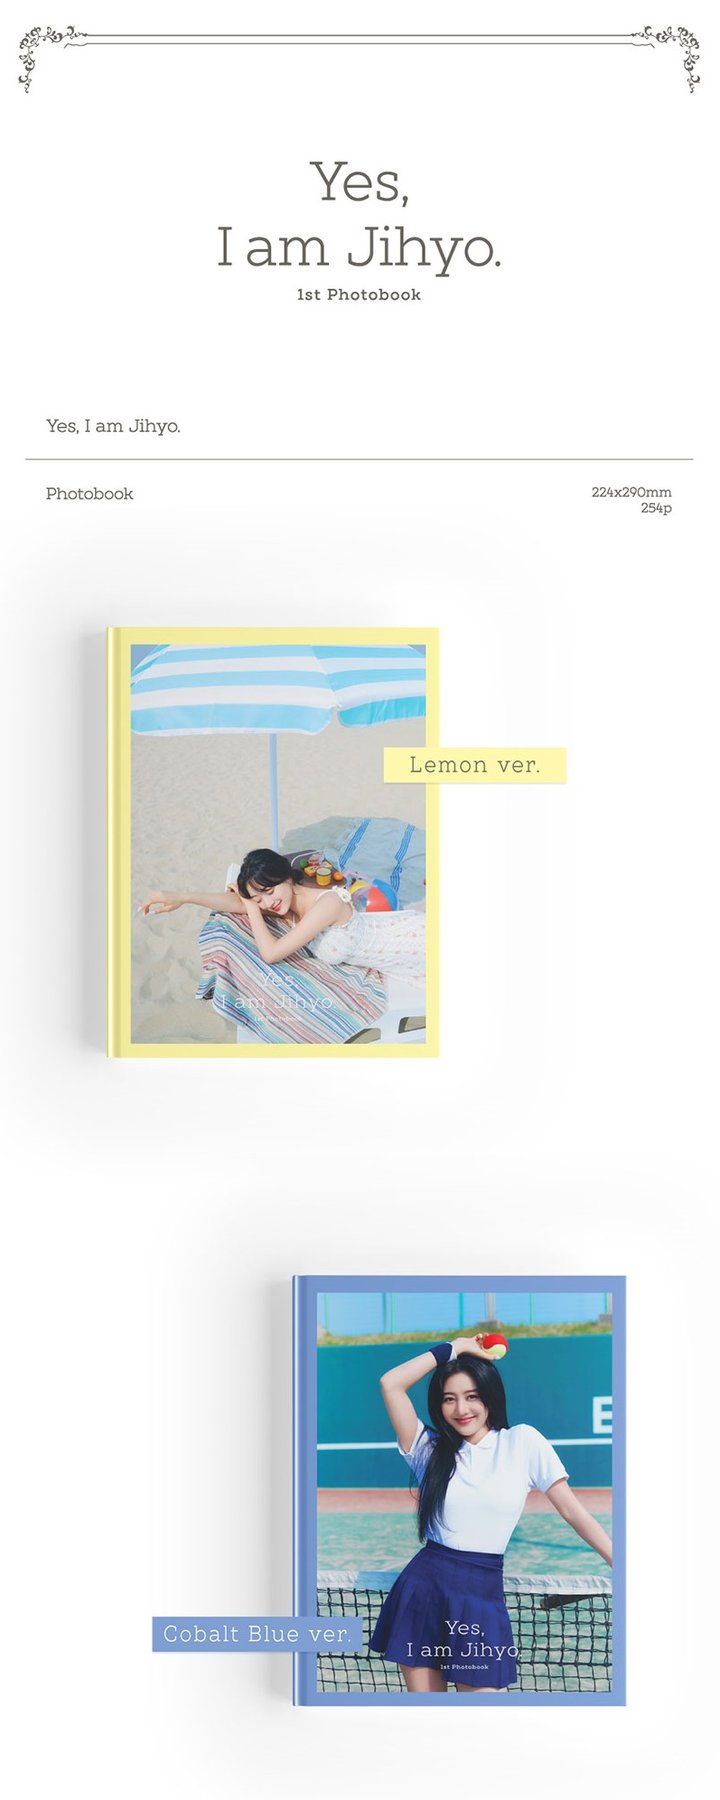 Twice: Jihyo Photobook - Yes, I am Jihyo (Random Version)